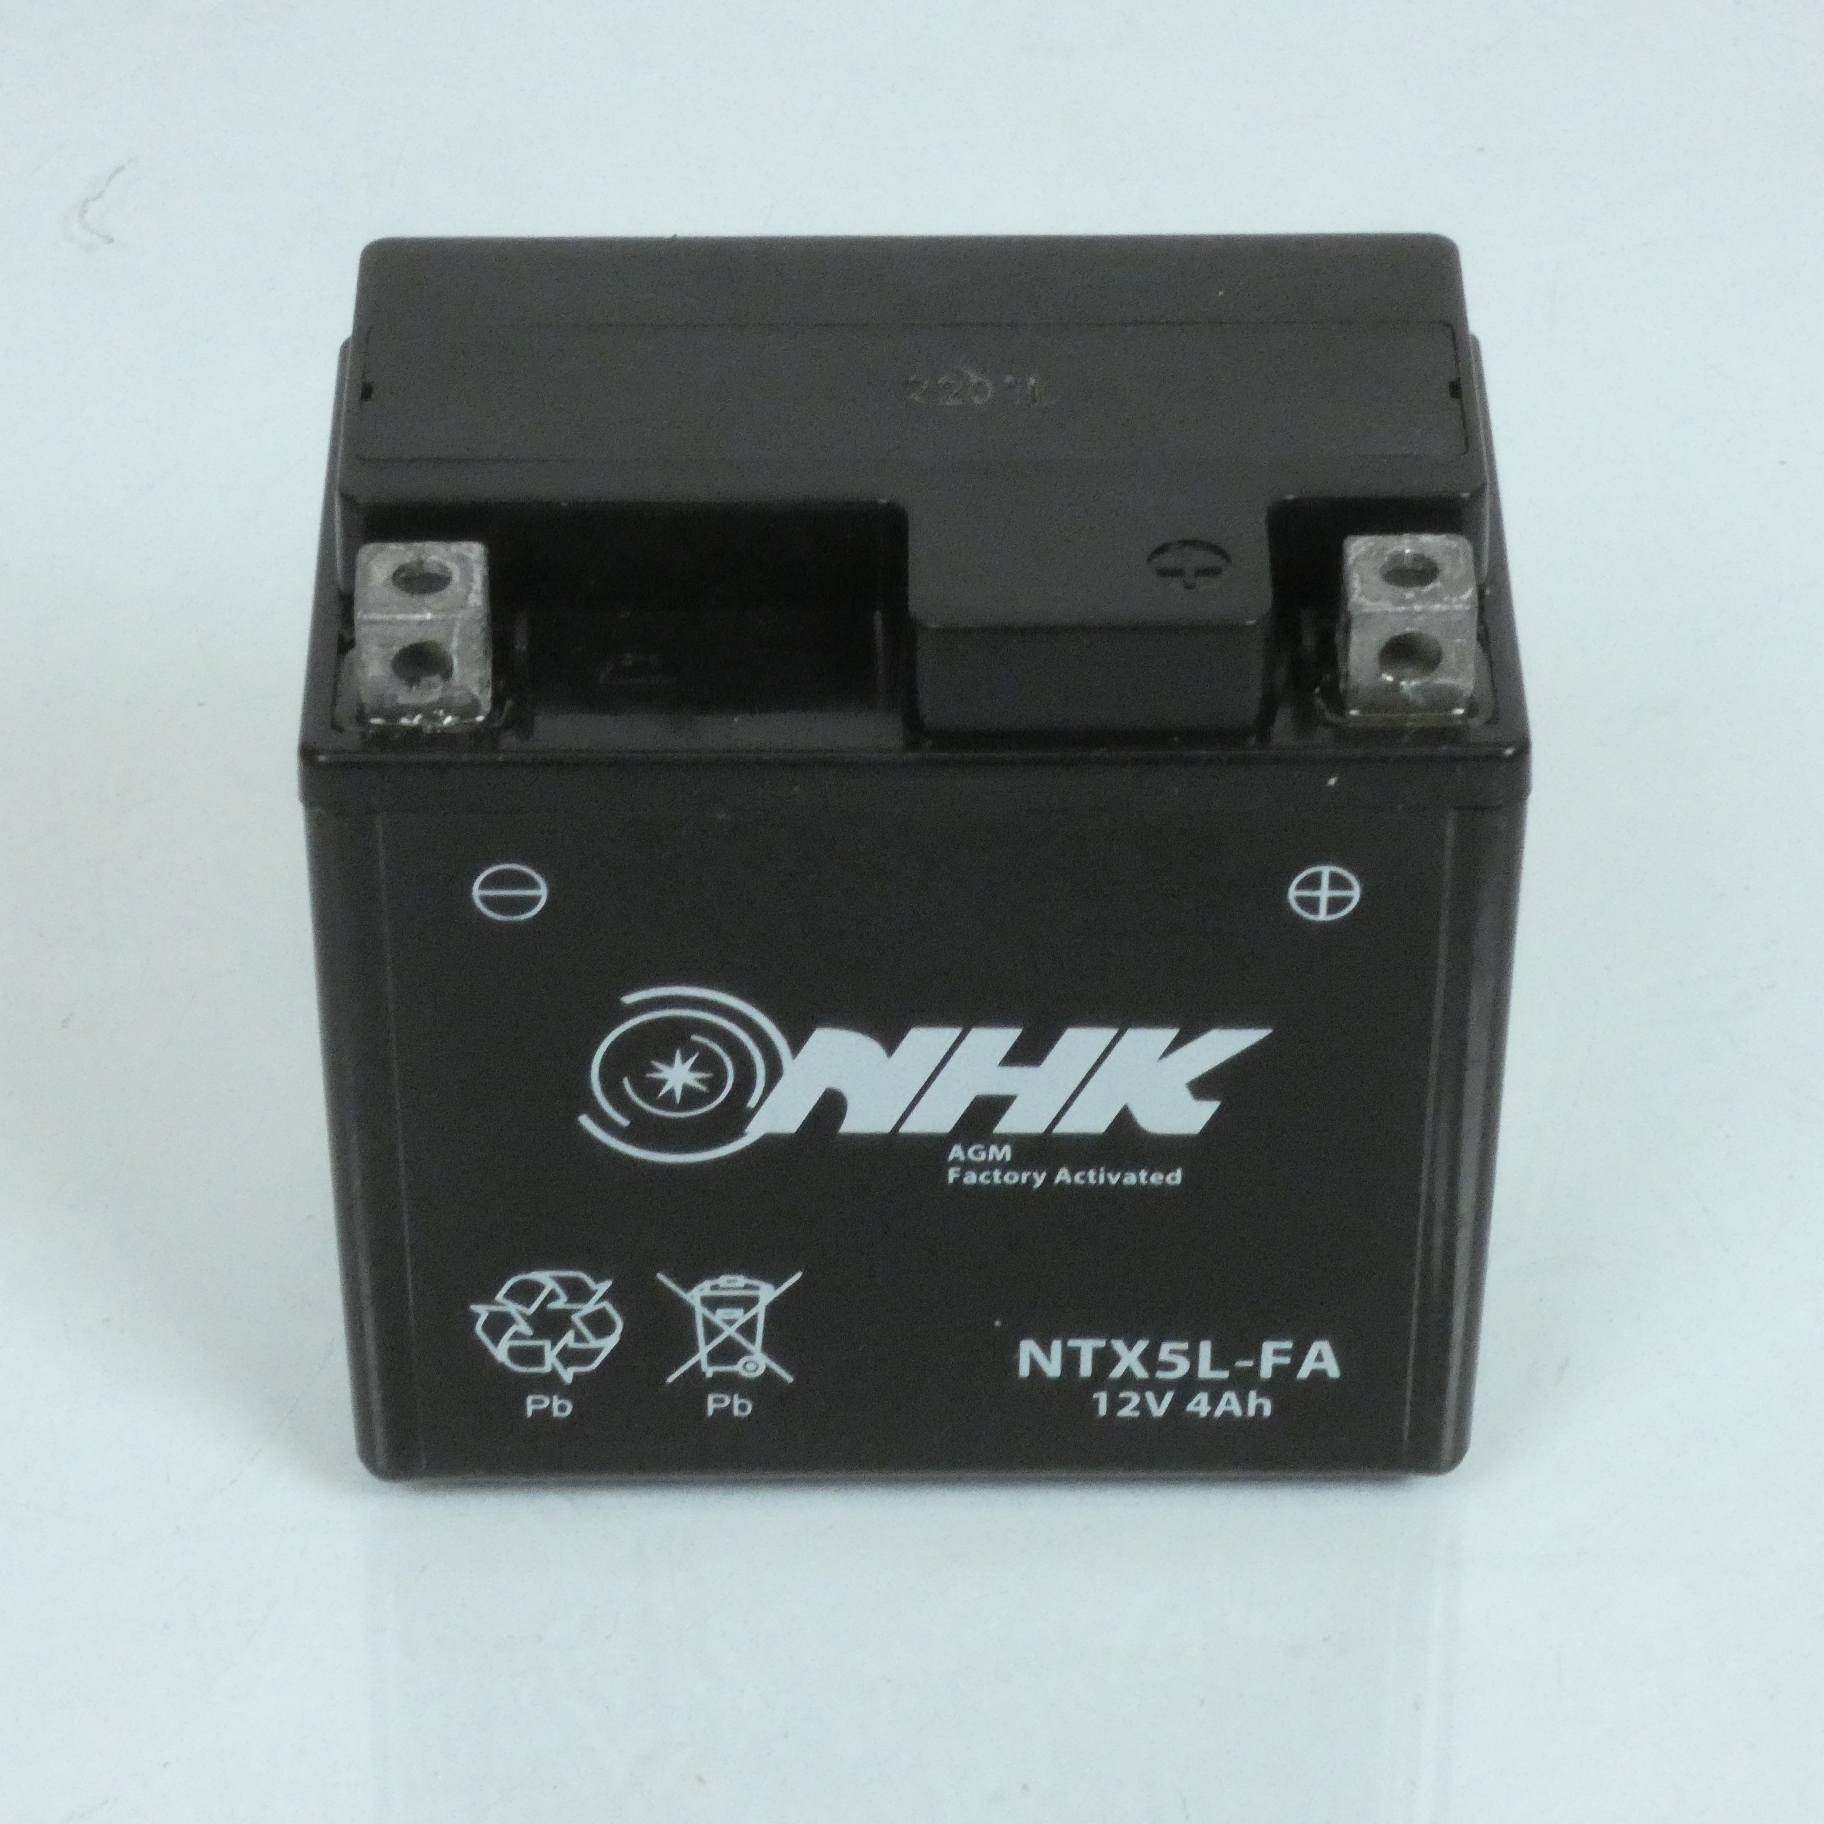 Batterie SLA NHK pour moto Aprilia 50 RX YTX5L-FA / equivalent YTX5L-BS Neuf